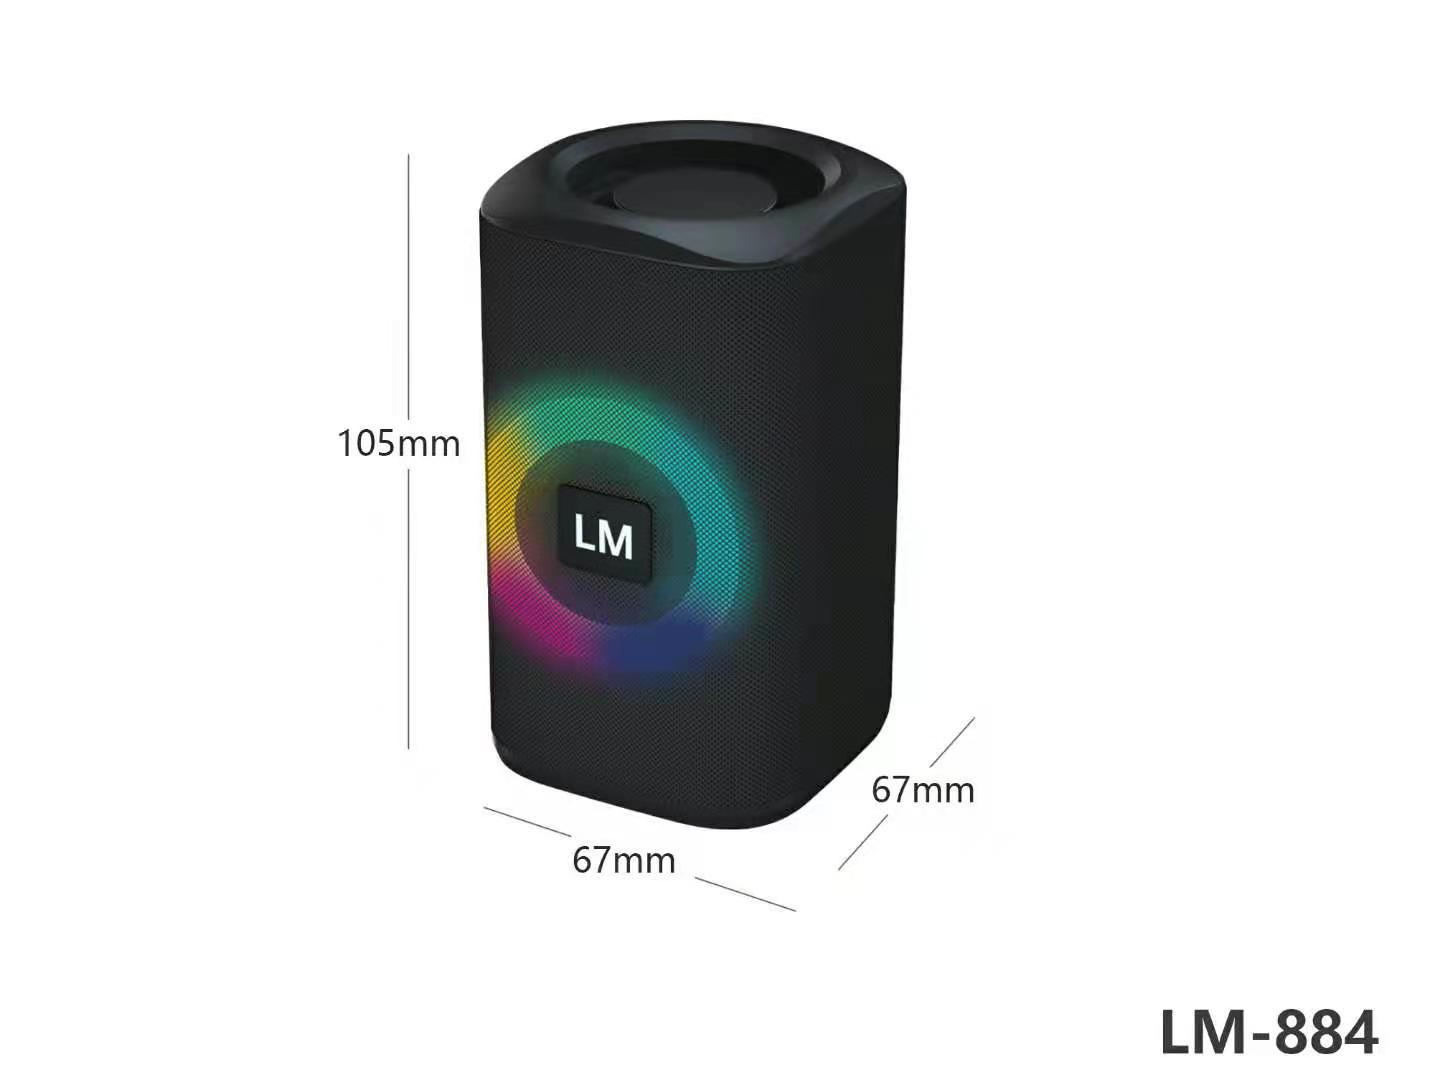 LM-884无线蓝牙音箱手机插卡重低音炮USB户外LED迷你音响外贸礼品